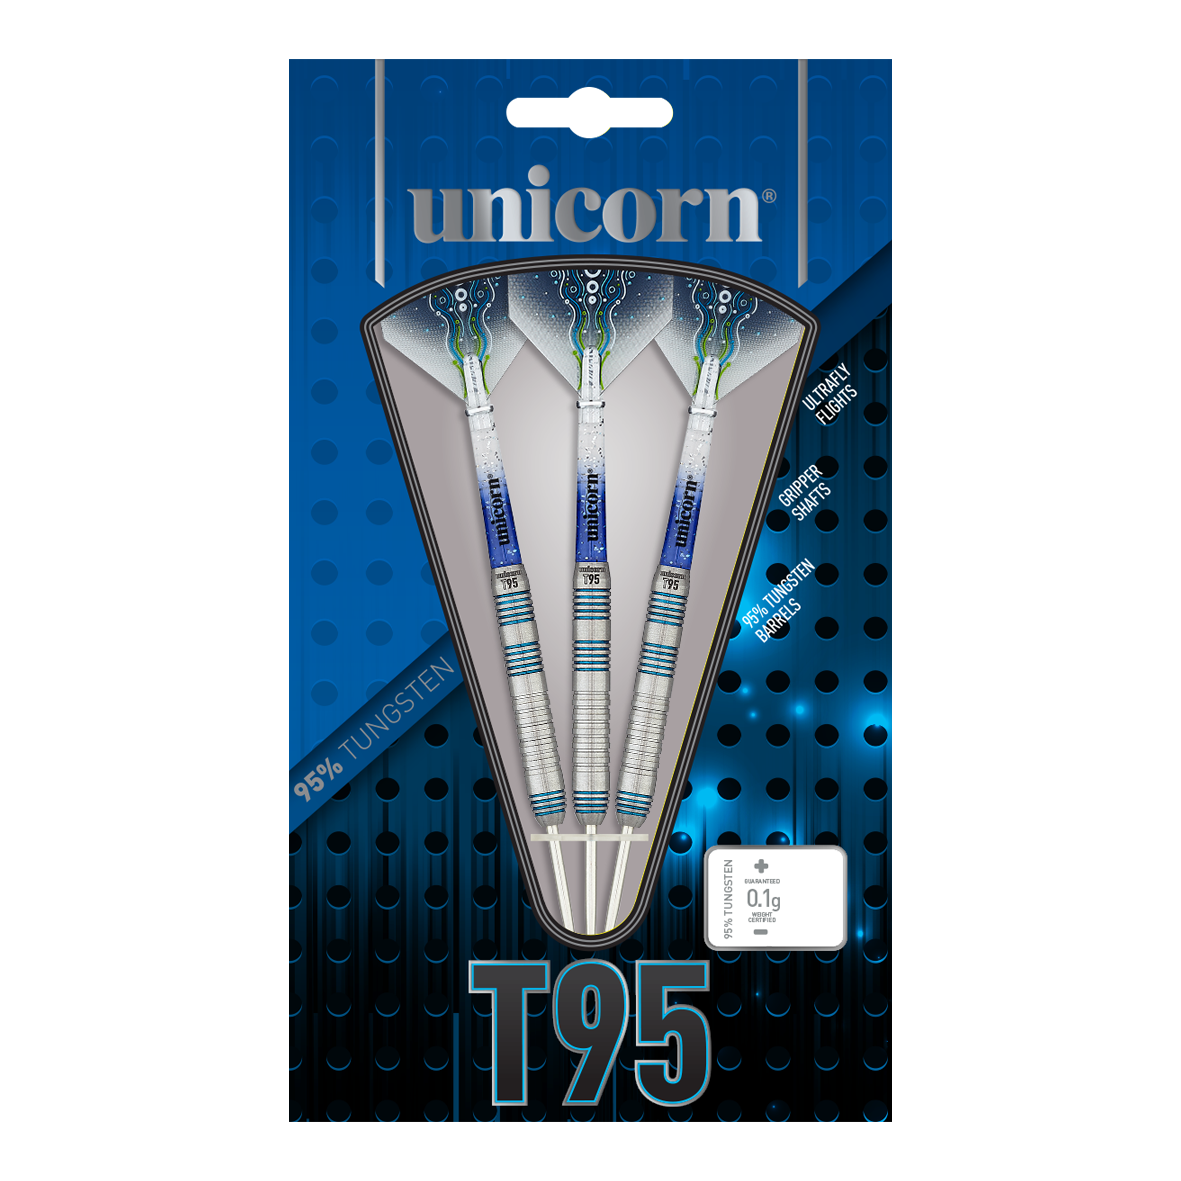 Unicorn T95 Core XL Blue Style 2 steel darts - 23g